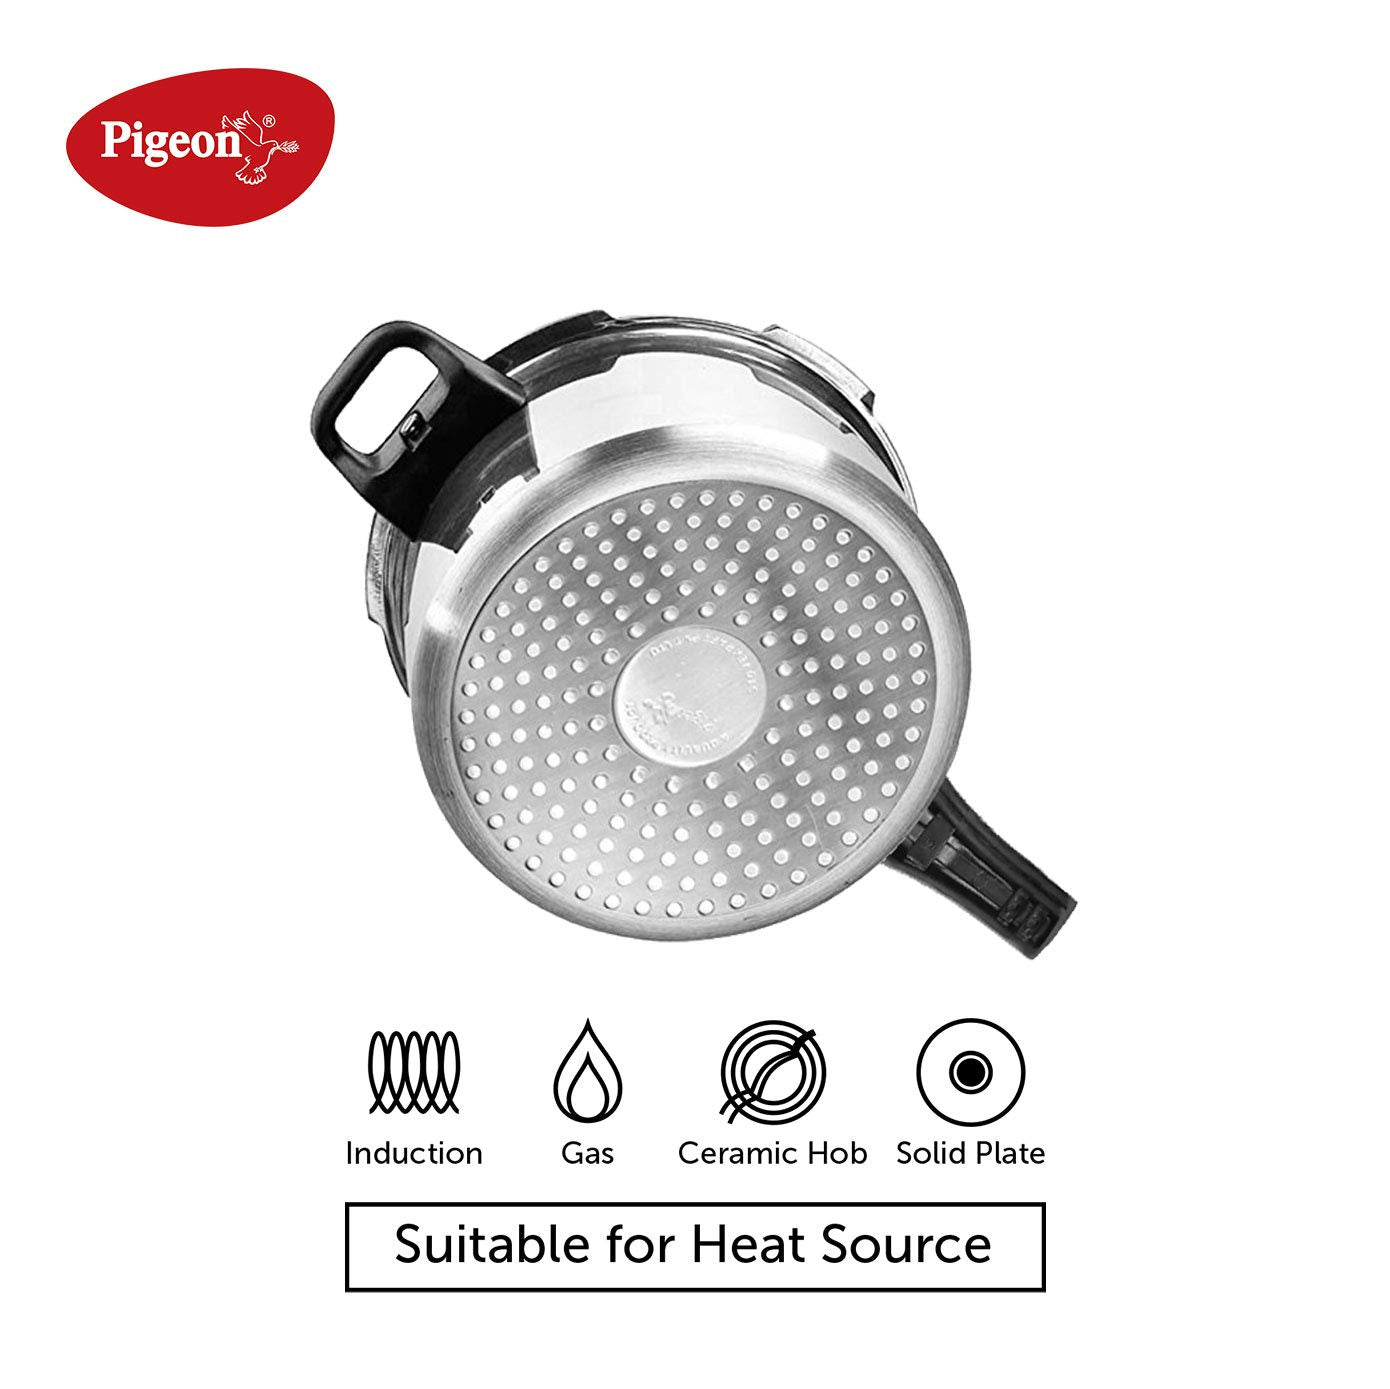 Pigeon by Stovekraft Inox Stainless Steel pressure cooker 5 L